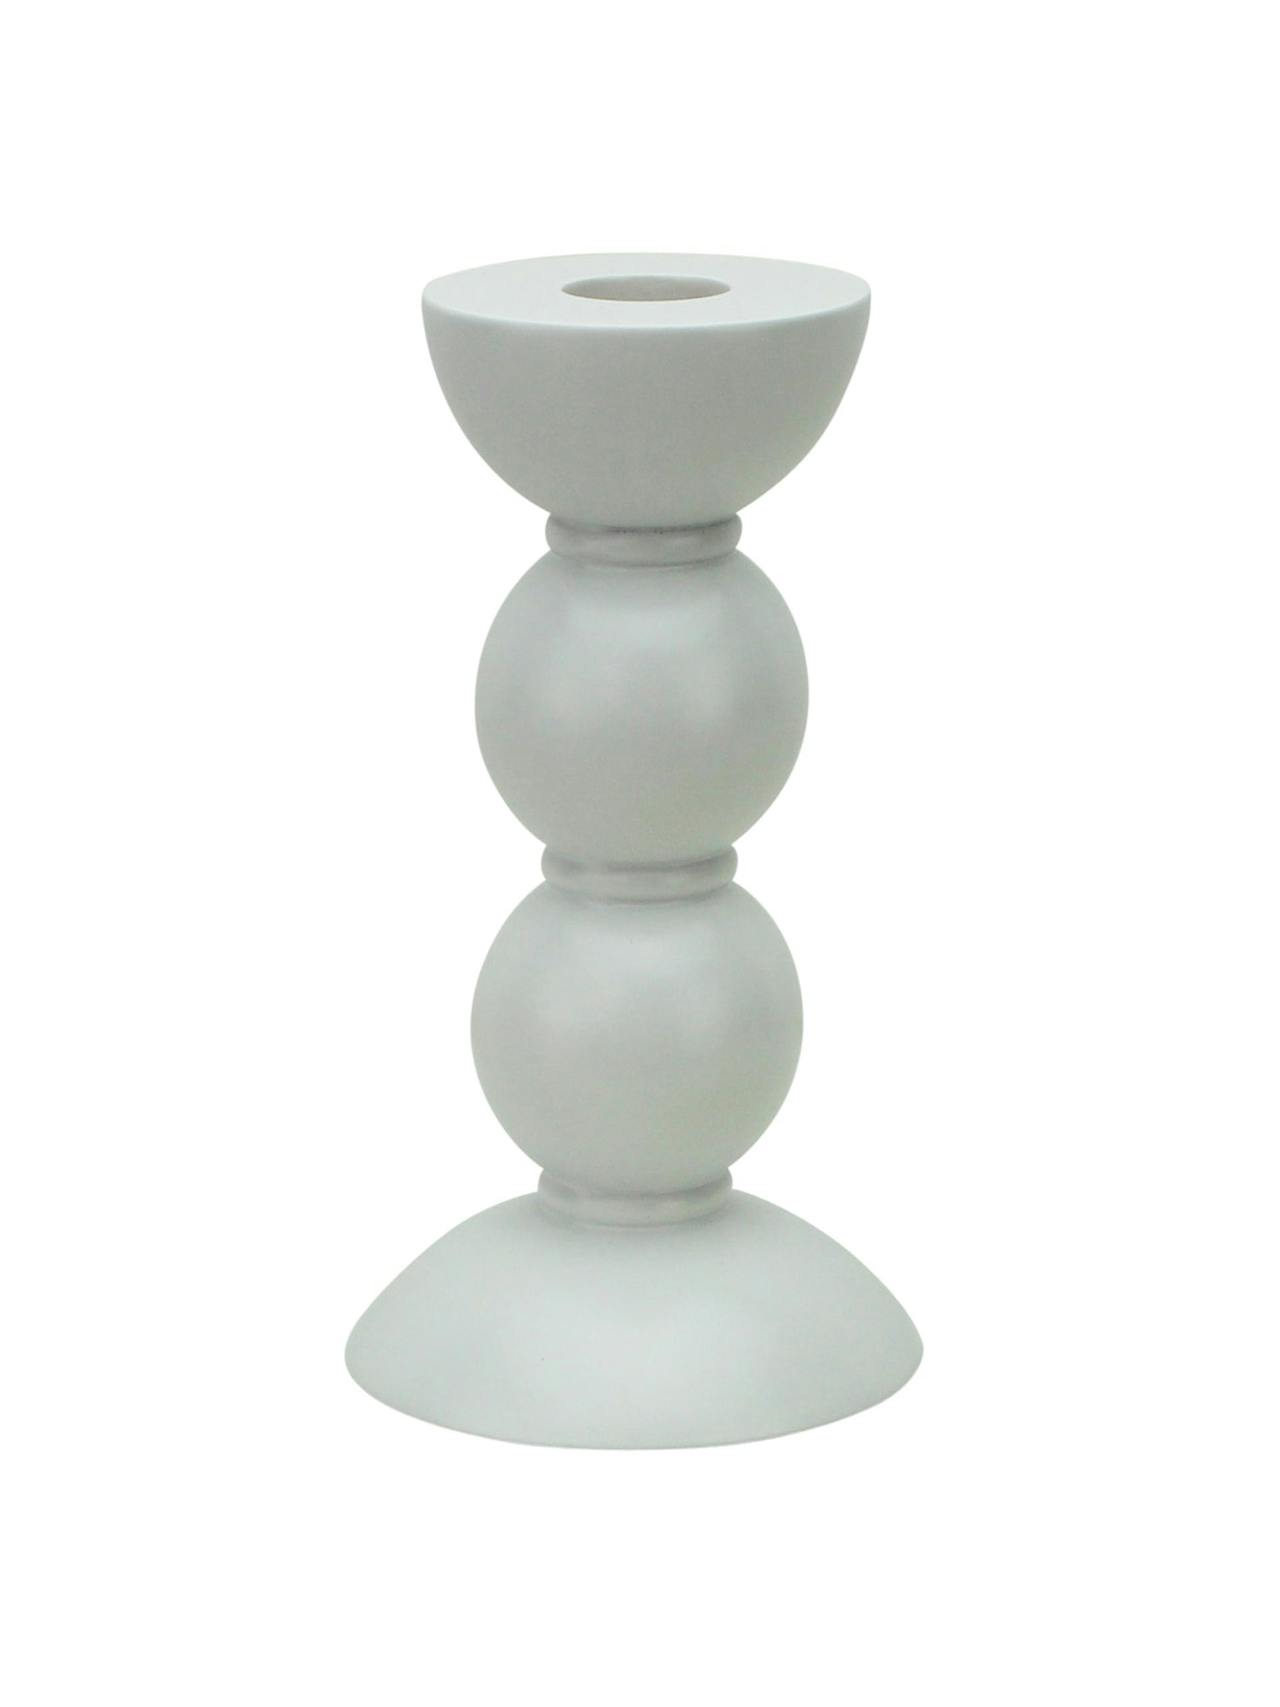 Short bobbin candlestick in white